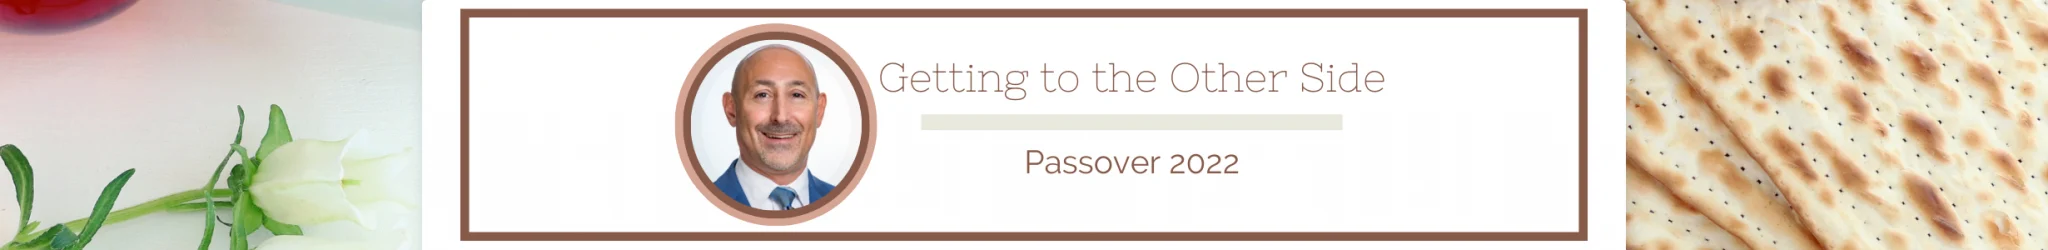 Jeffrey Gopen Passover Greeting